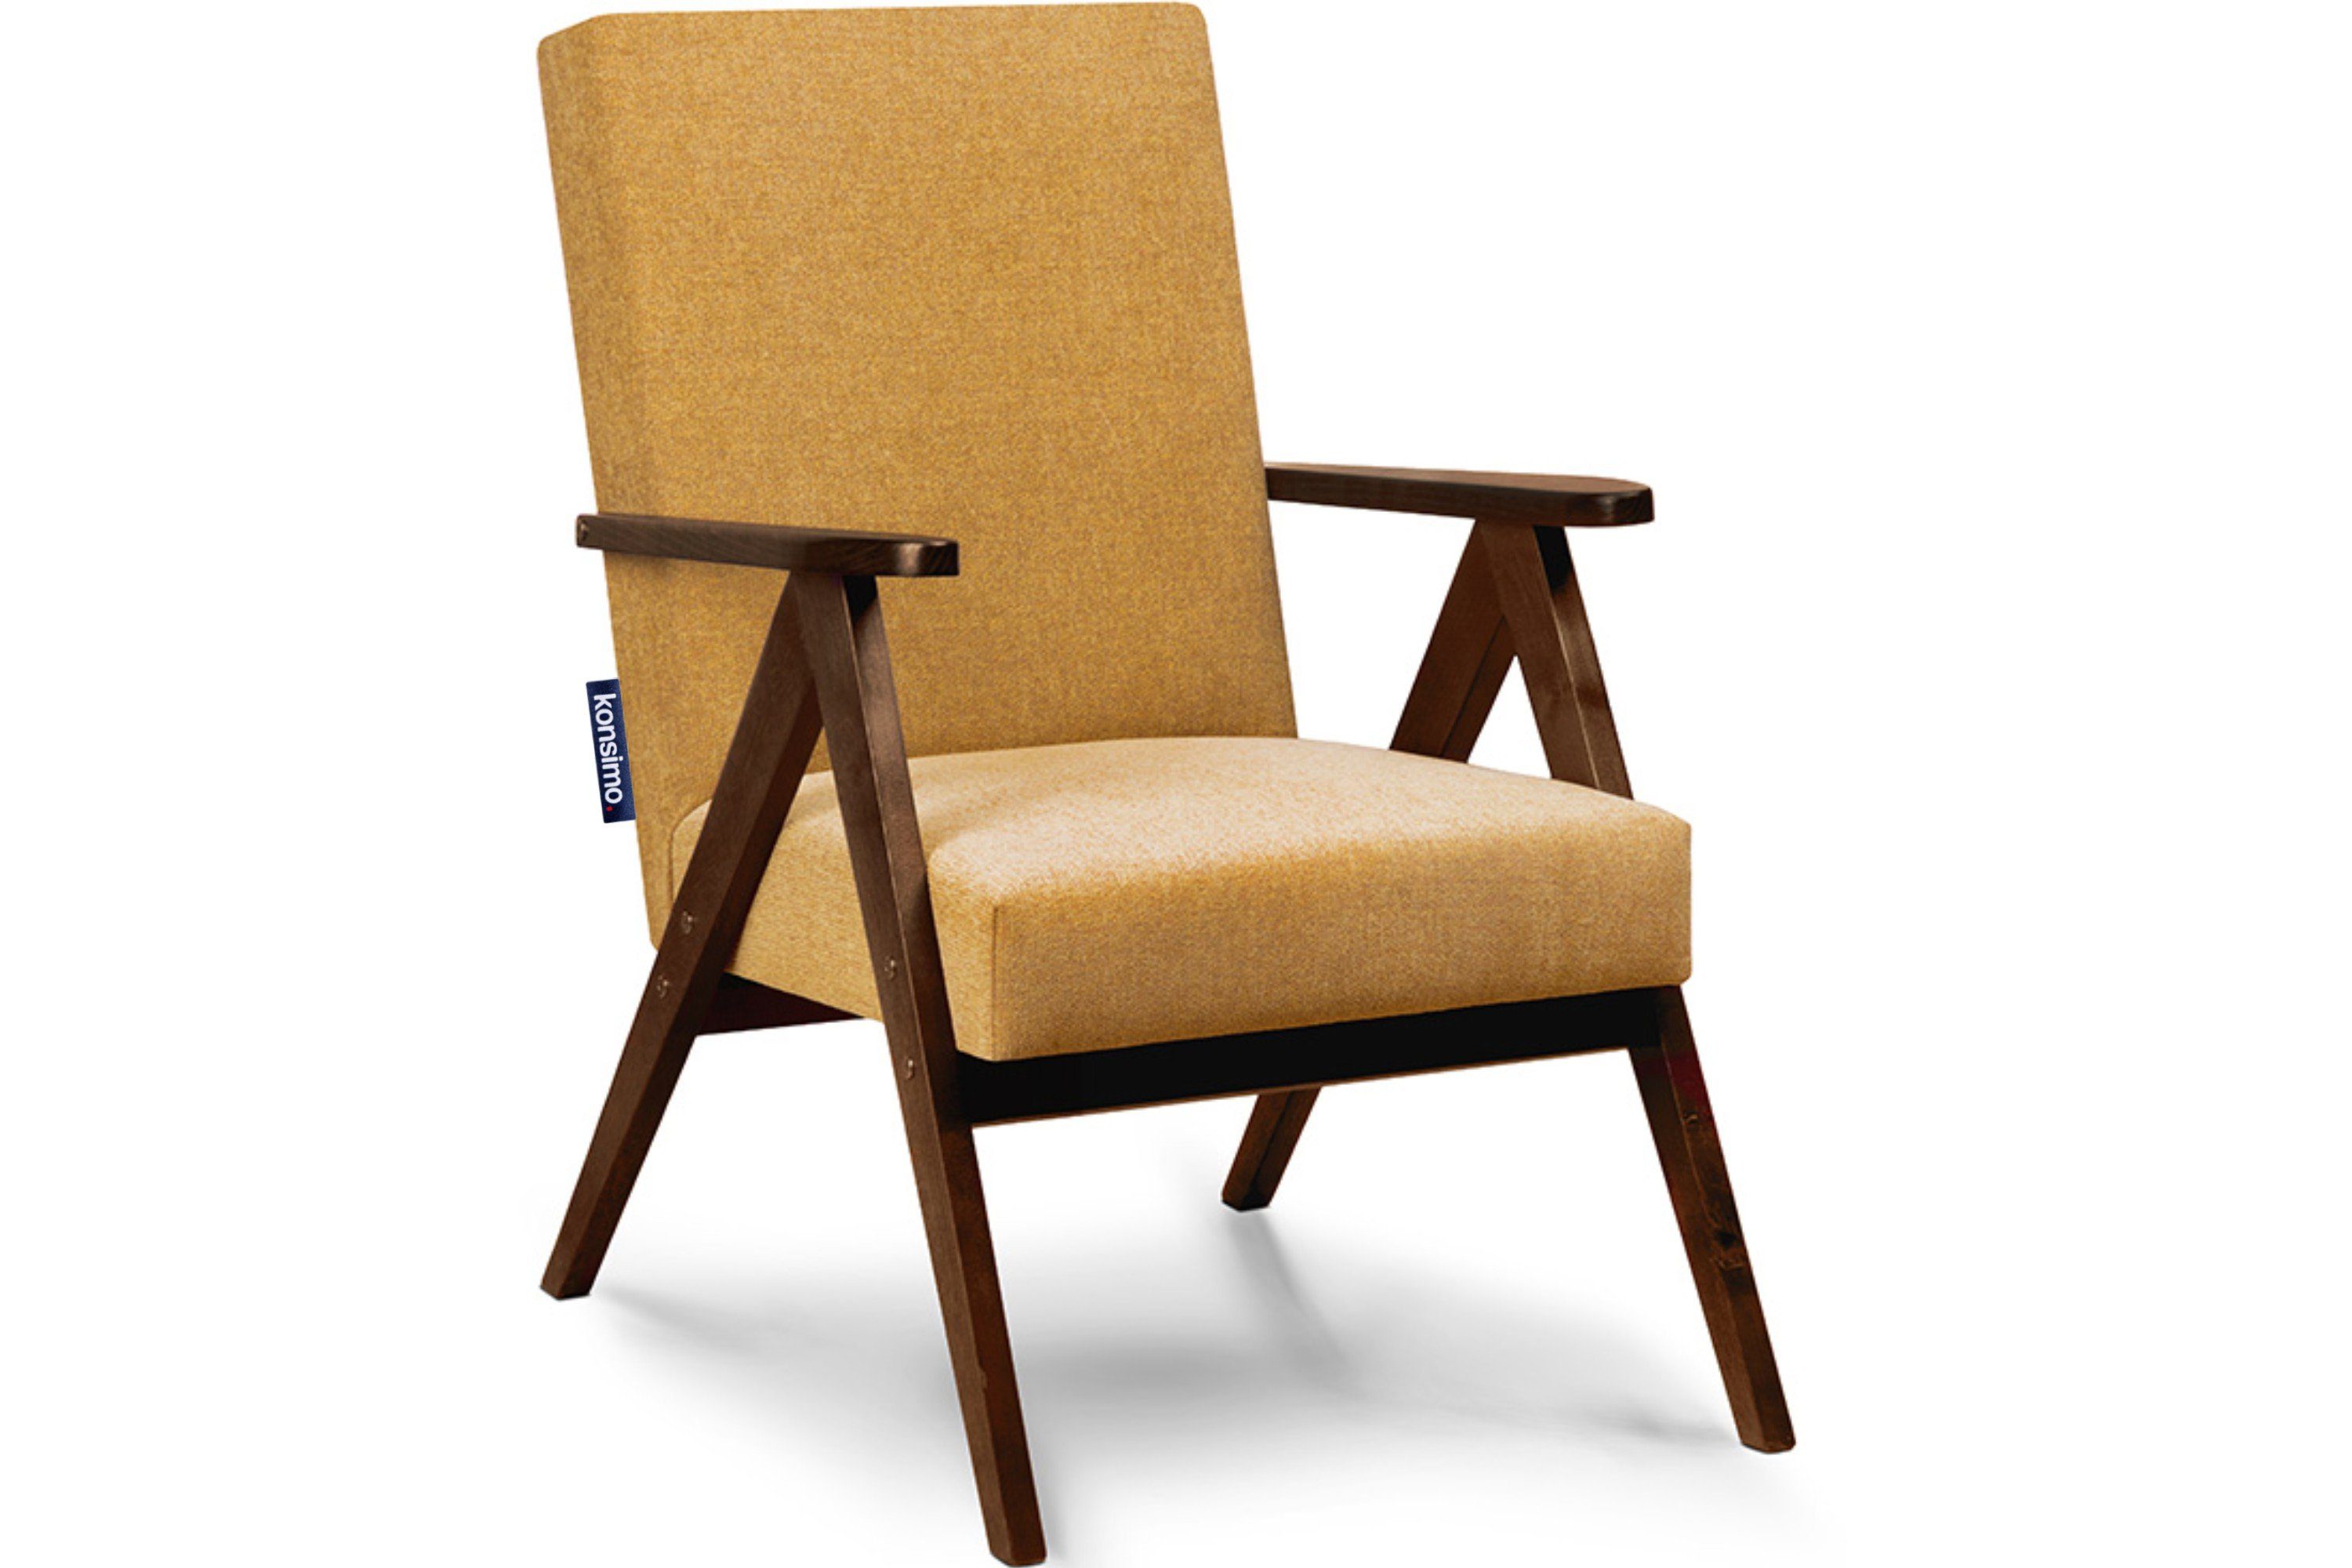 Konsimo Cocktailsessel NASET Sessel, Rahmen aus lackiertem Holz, profilierte Rückenlehne | Cocktailsessel